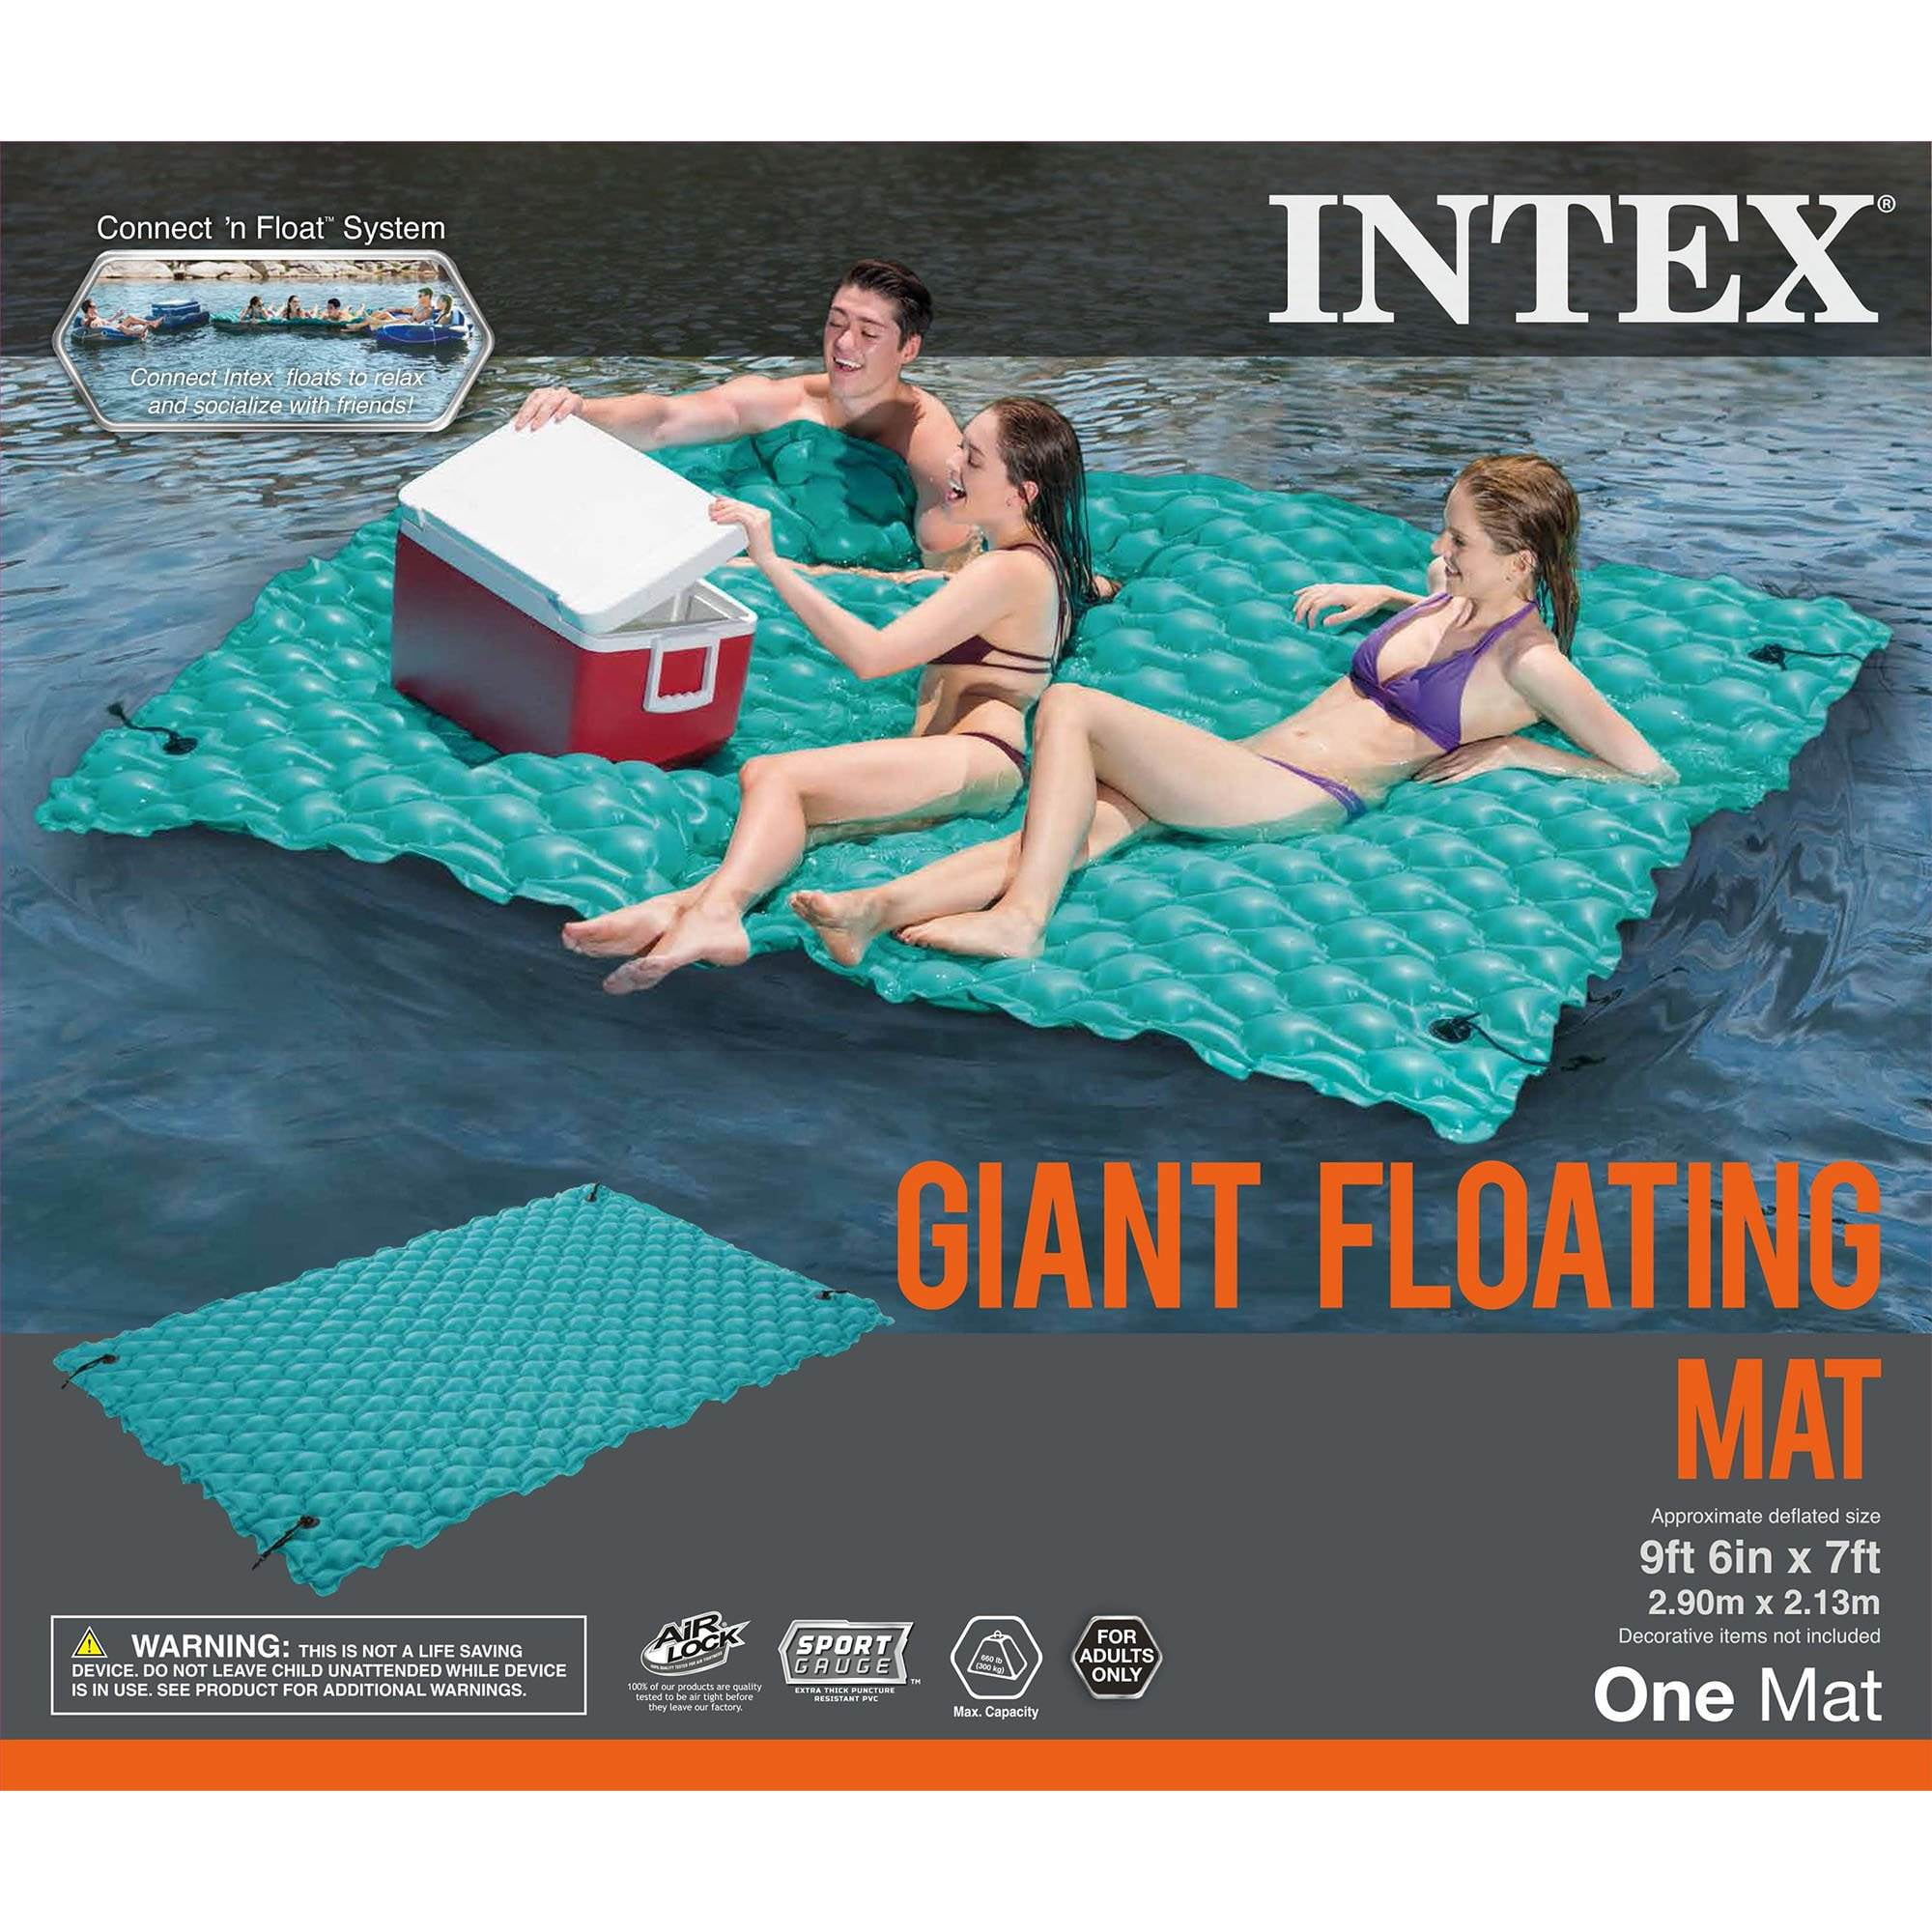 Giant Inflatable Floating Mat - Pool Float Lake Float Raft Lounge